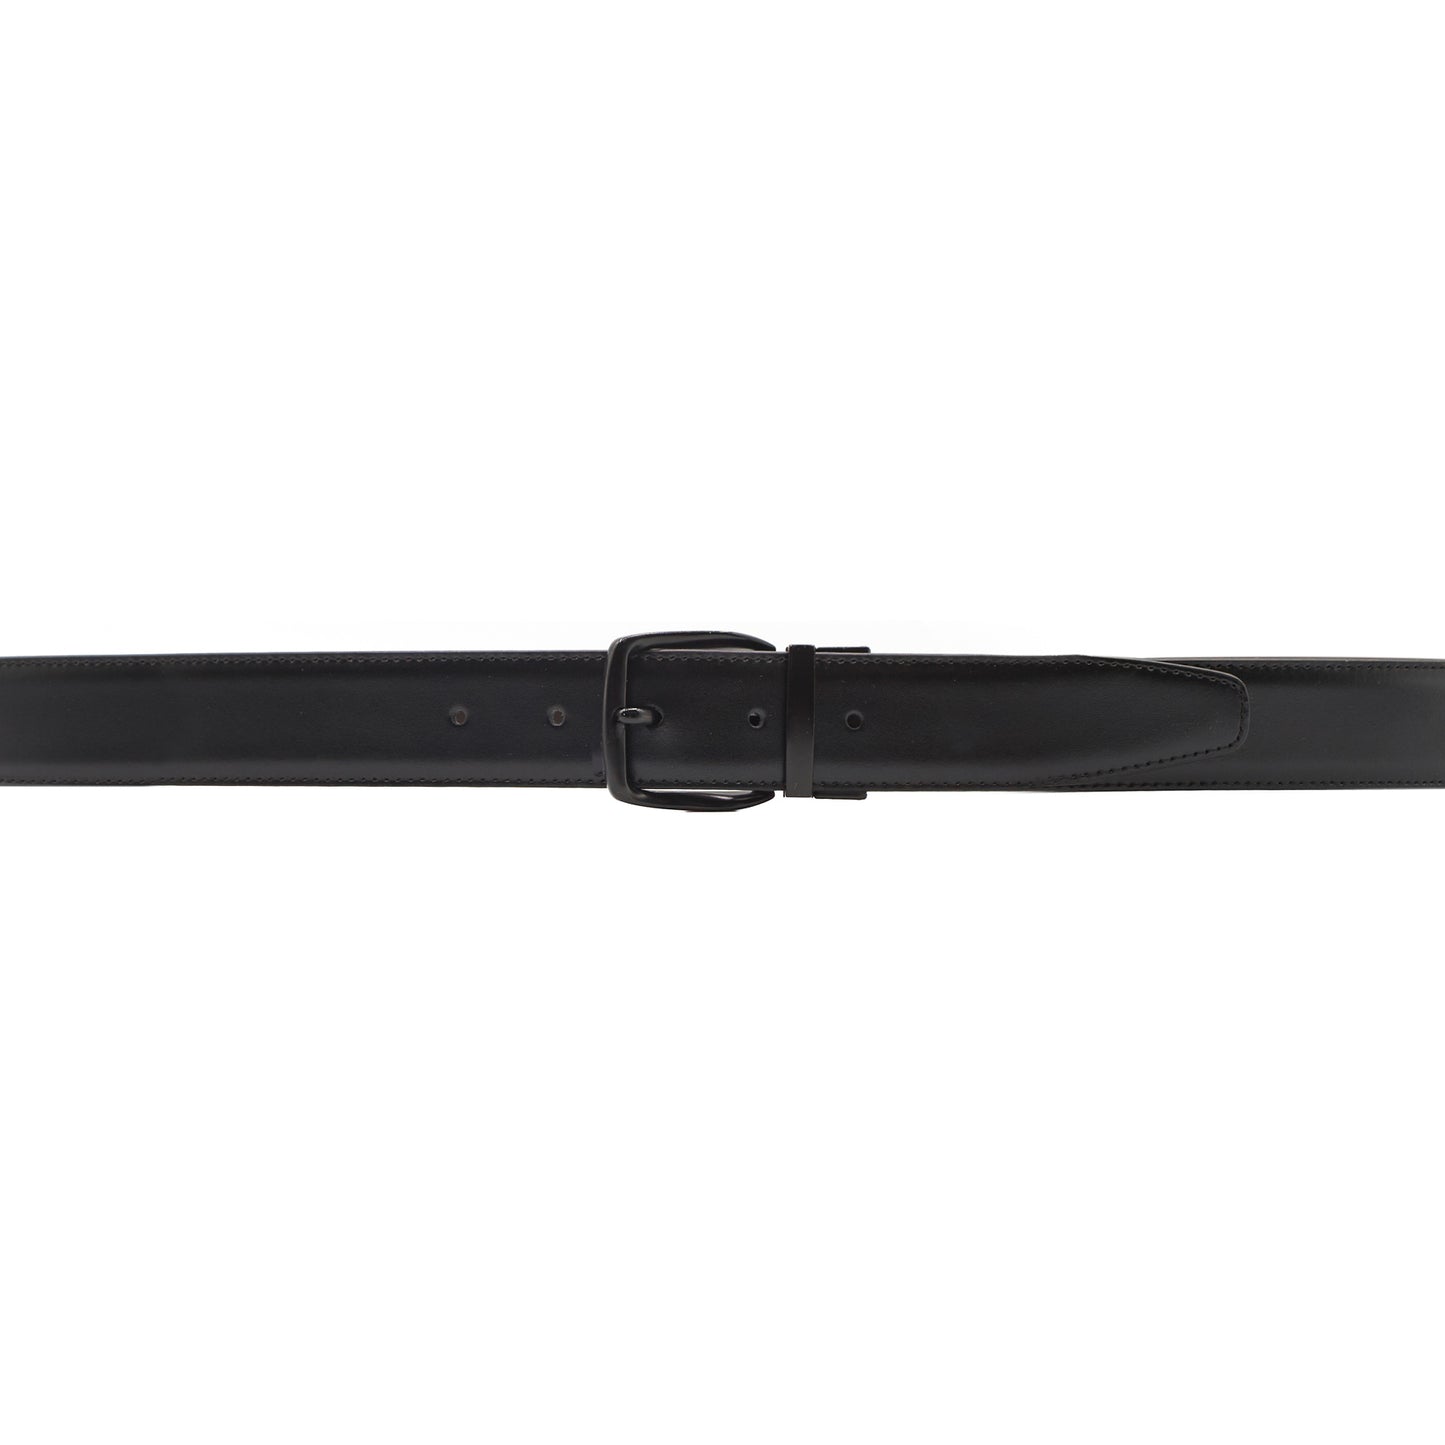 Cinture D'autore - Cintura reversibile 2 in 1 con Fibbia Nera opaca - Cintura in Vera Pelle 100% Made in Italy.